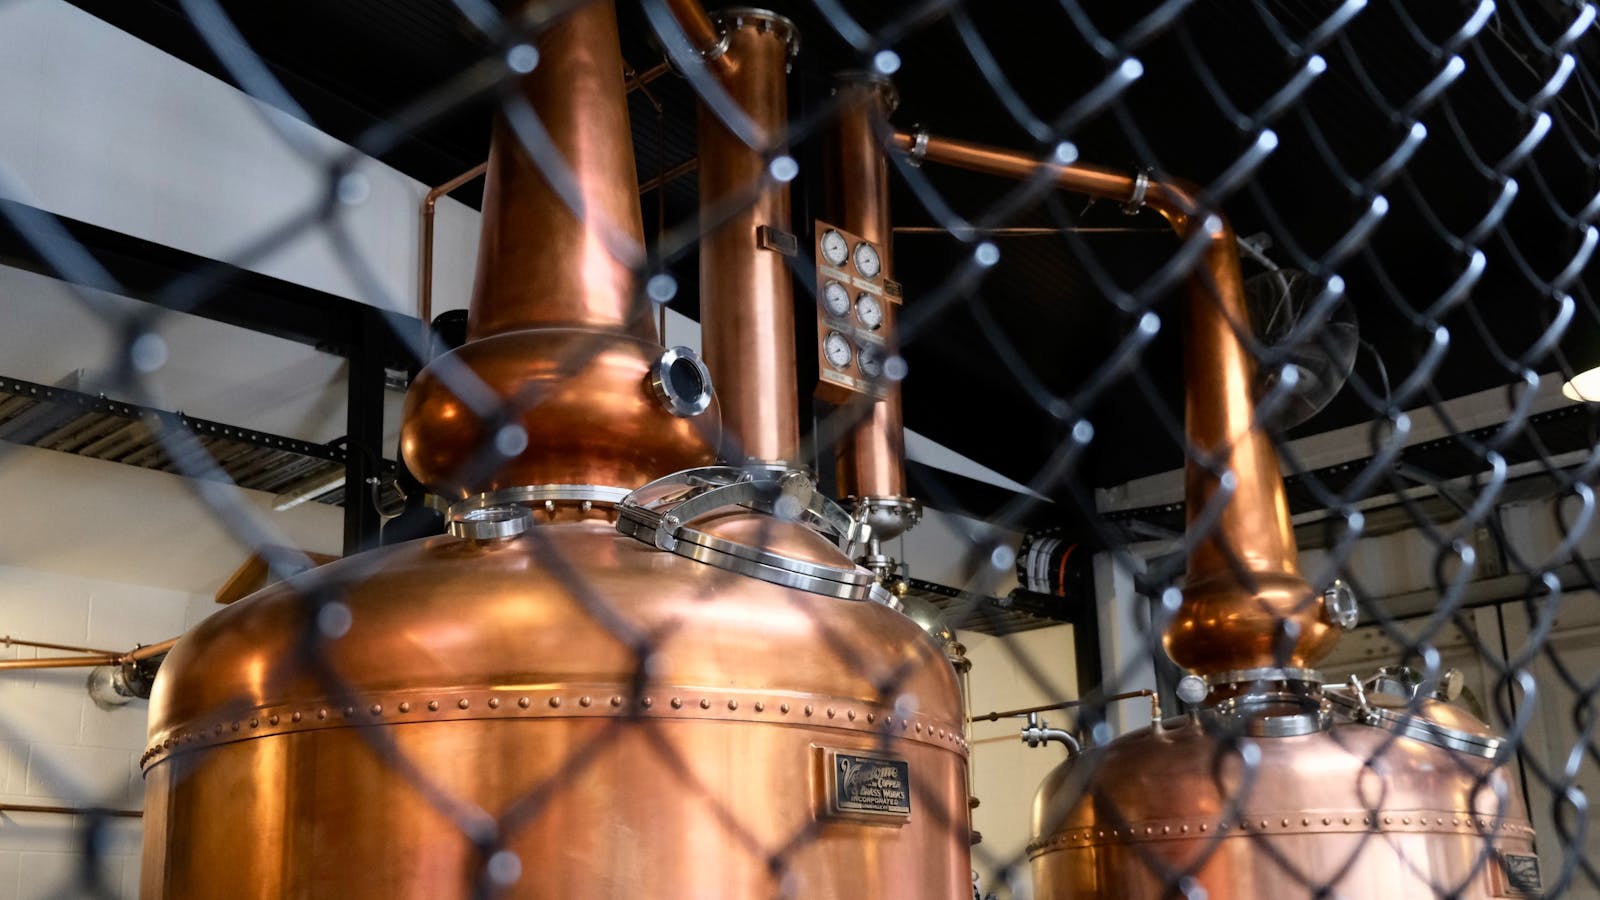 Overland produces Tasmanian Rye and Single Malt whisky using custom designed copper stills